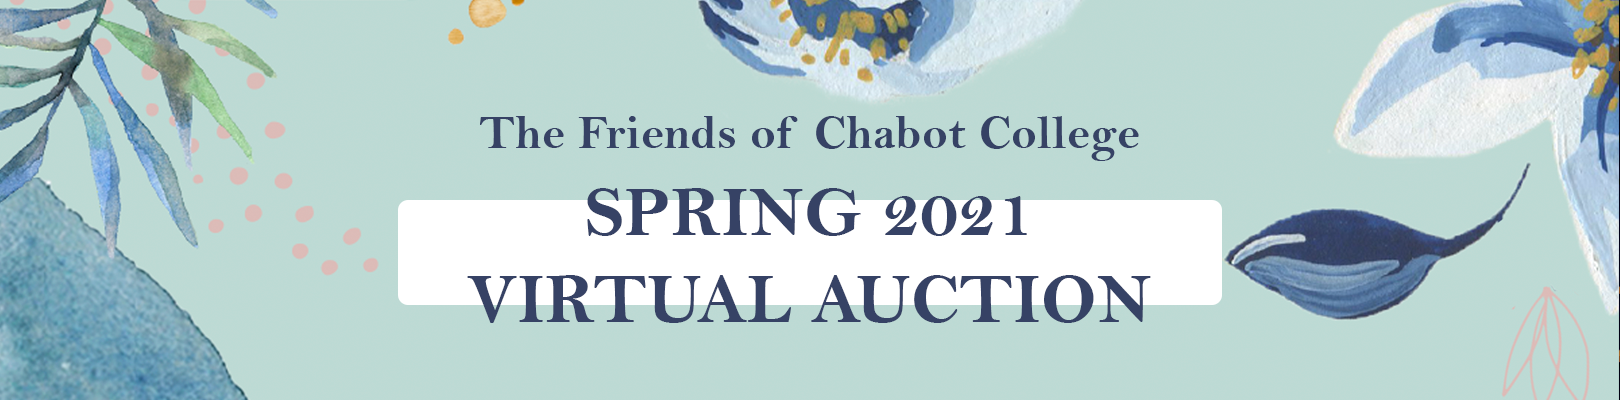 Spring 2021 Virtual Auction